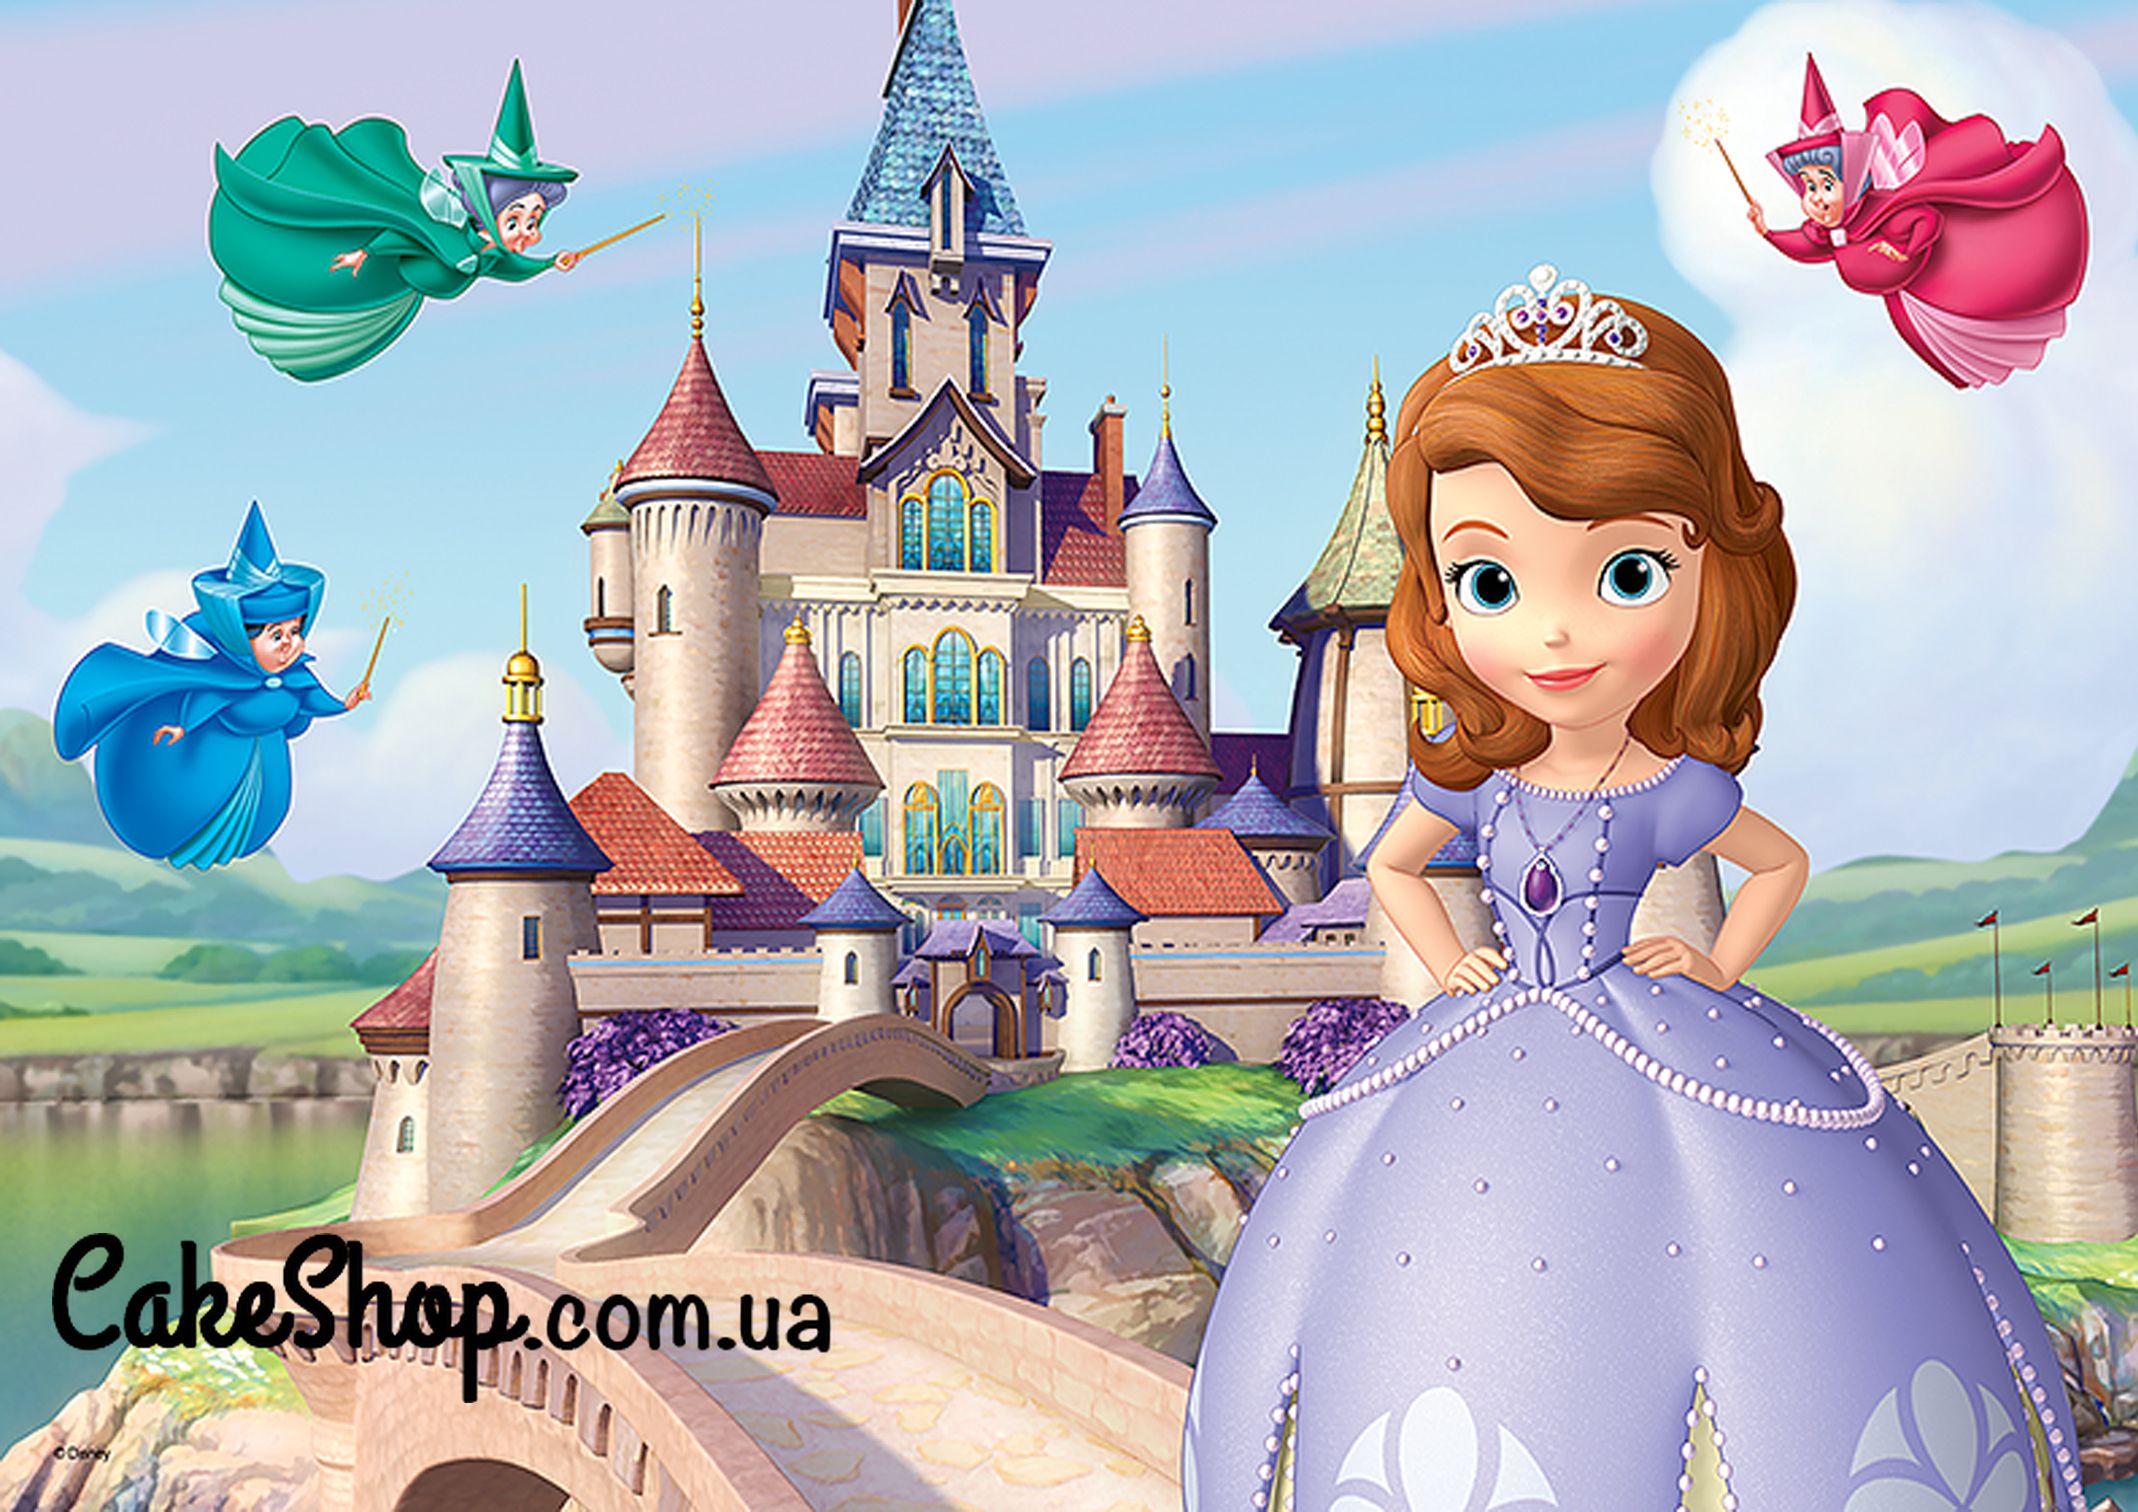 ⋗ Цукрова картинка Принцеса Софія 5 купити в Україні ➛ CakeShop.com.ua, фото